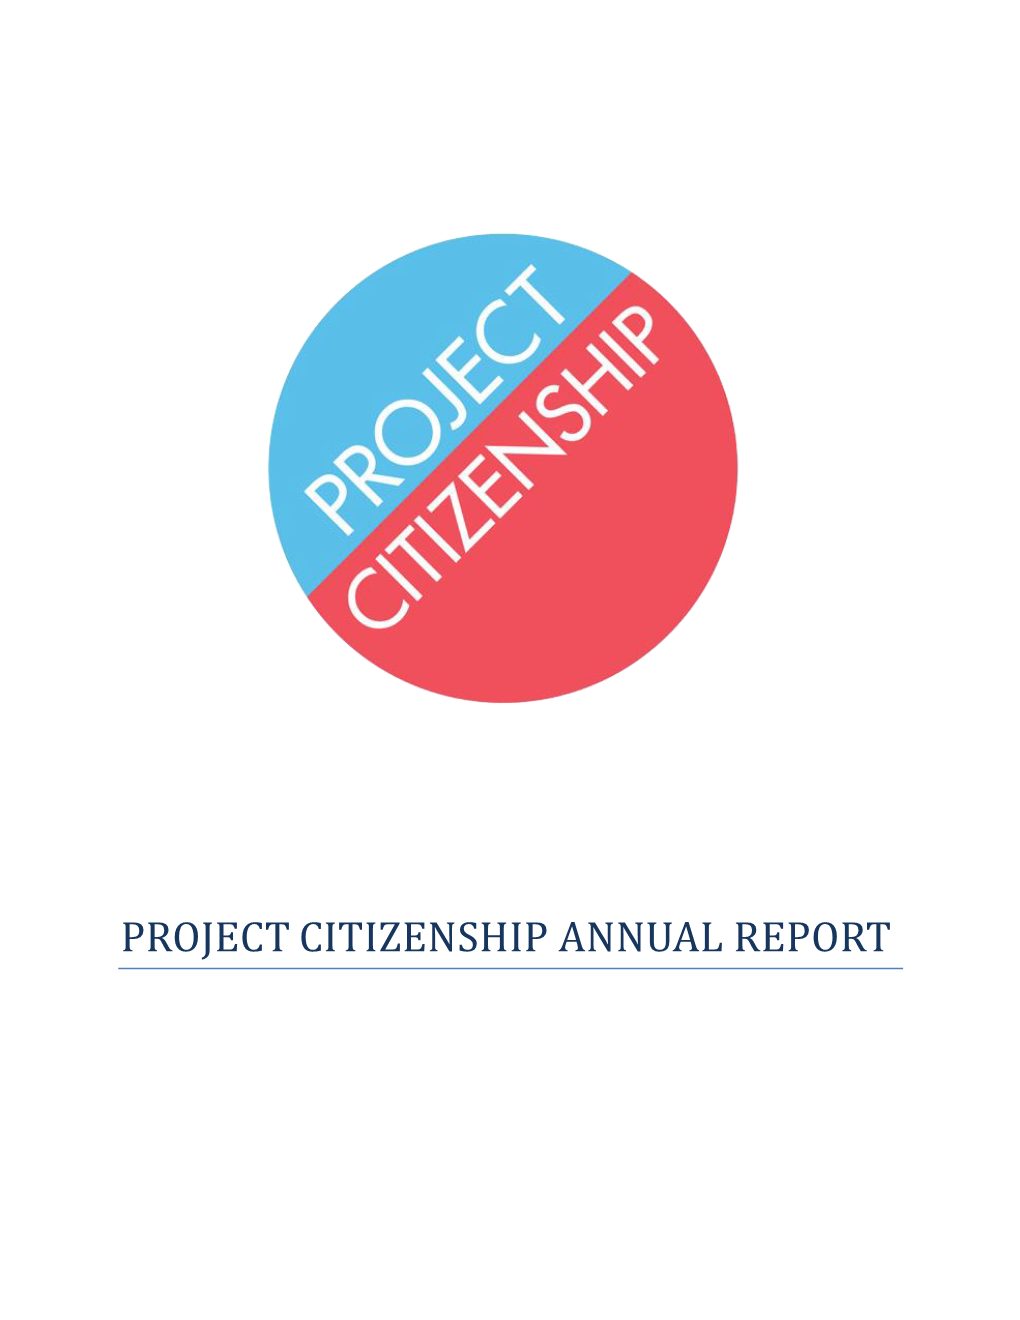 Project Citizenship Annual Report